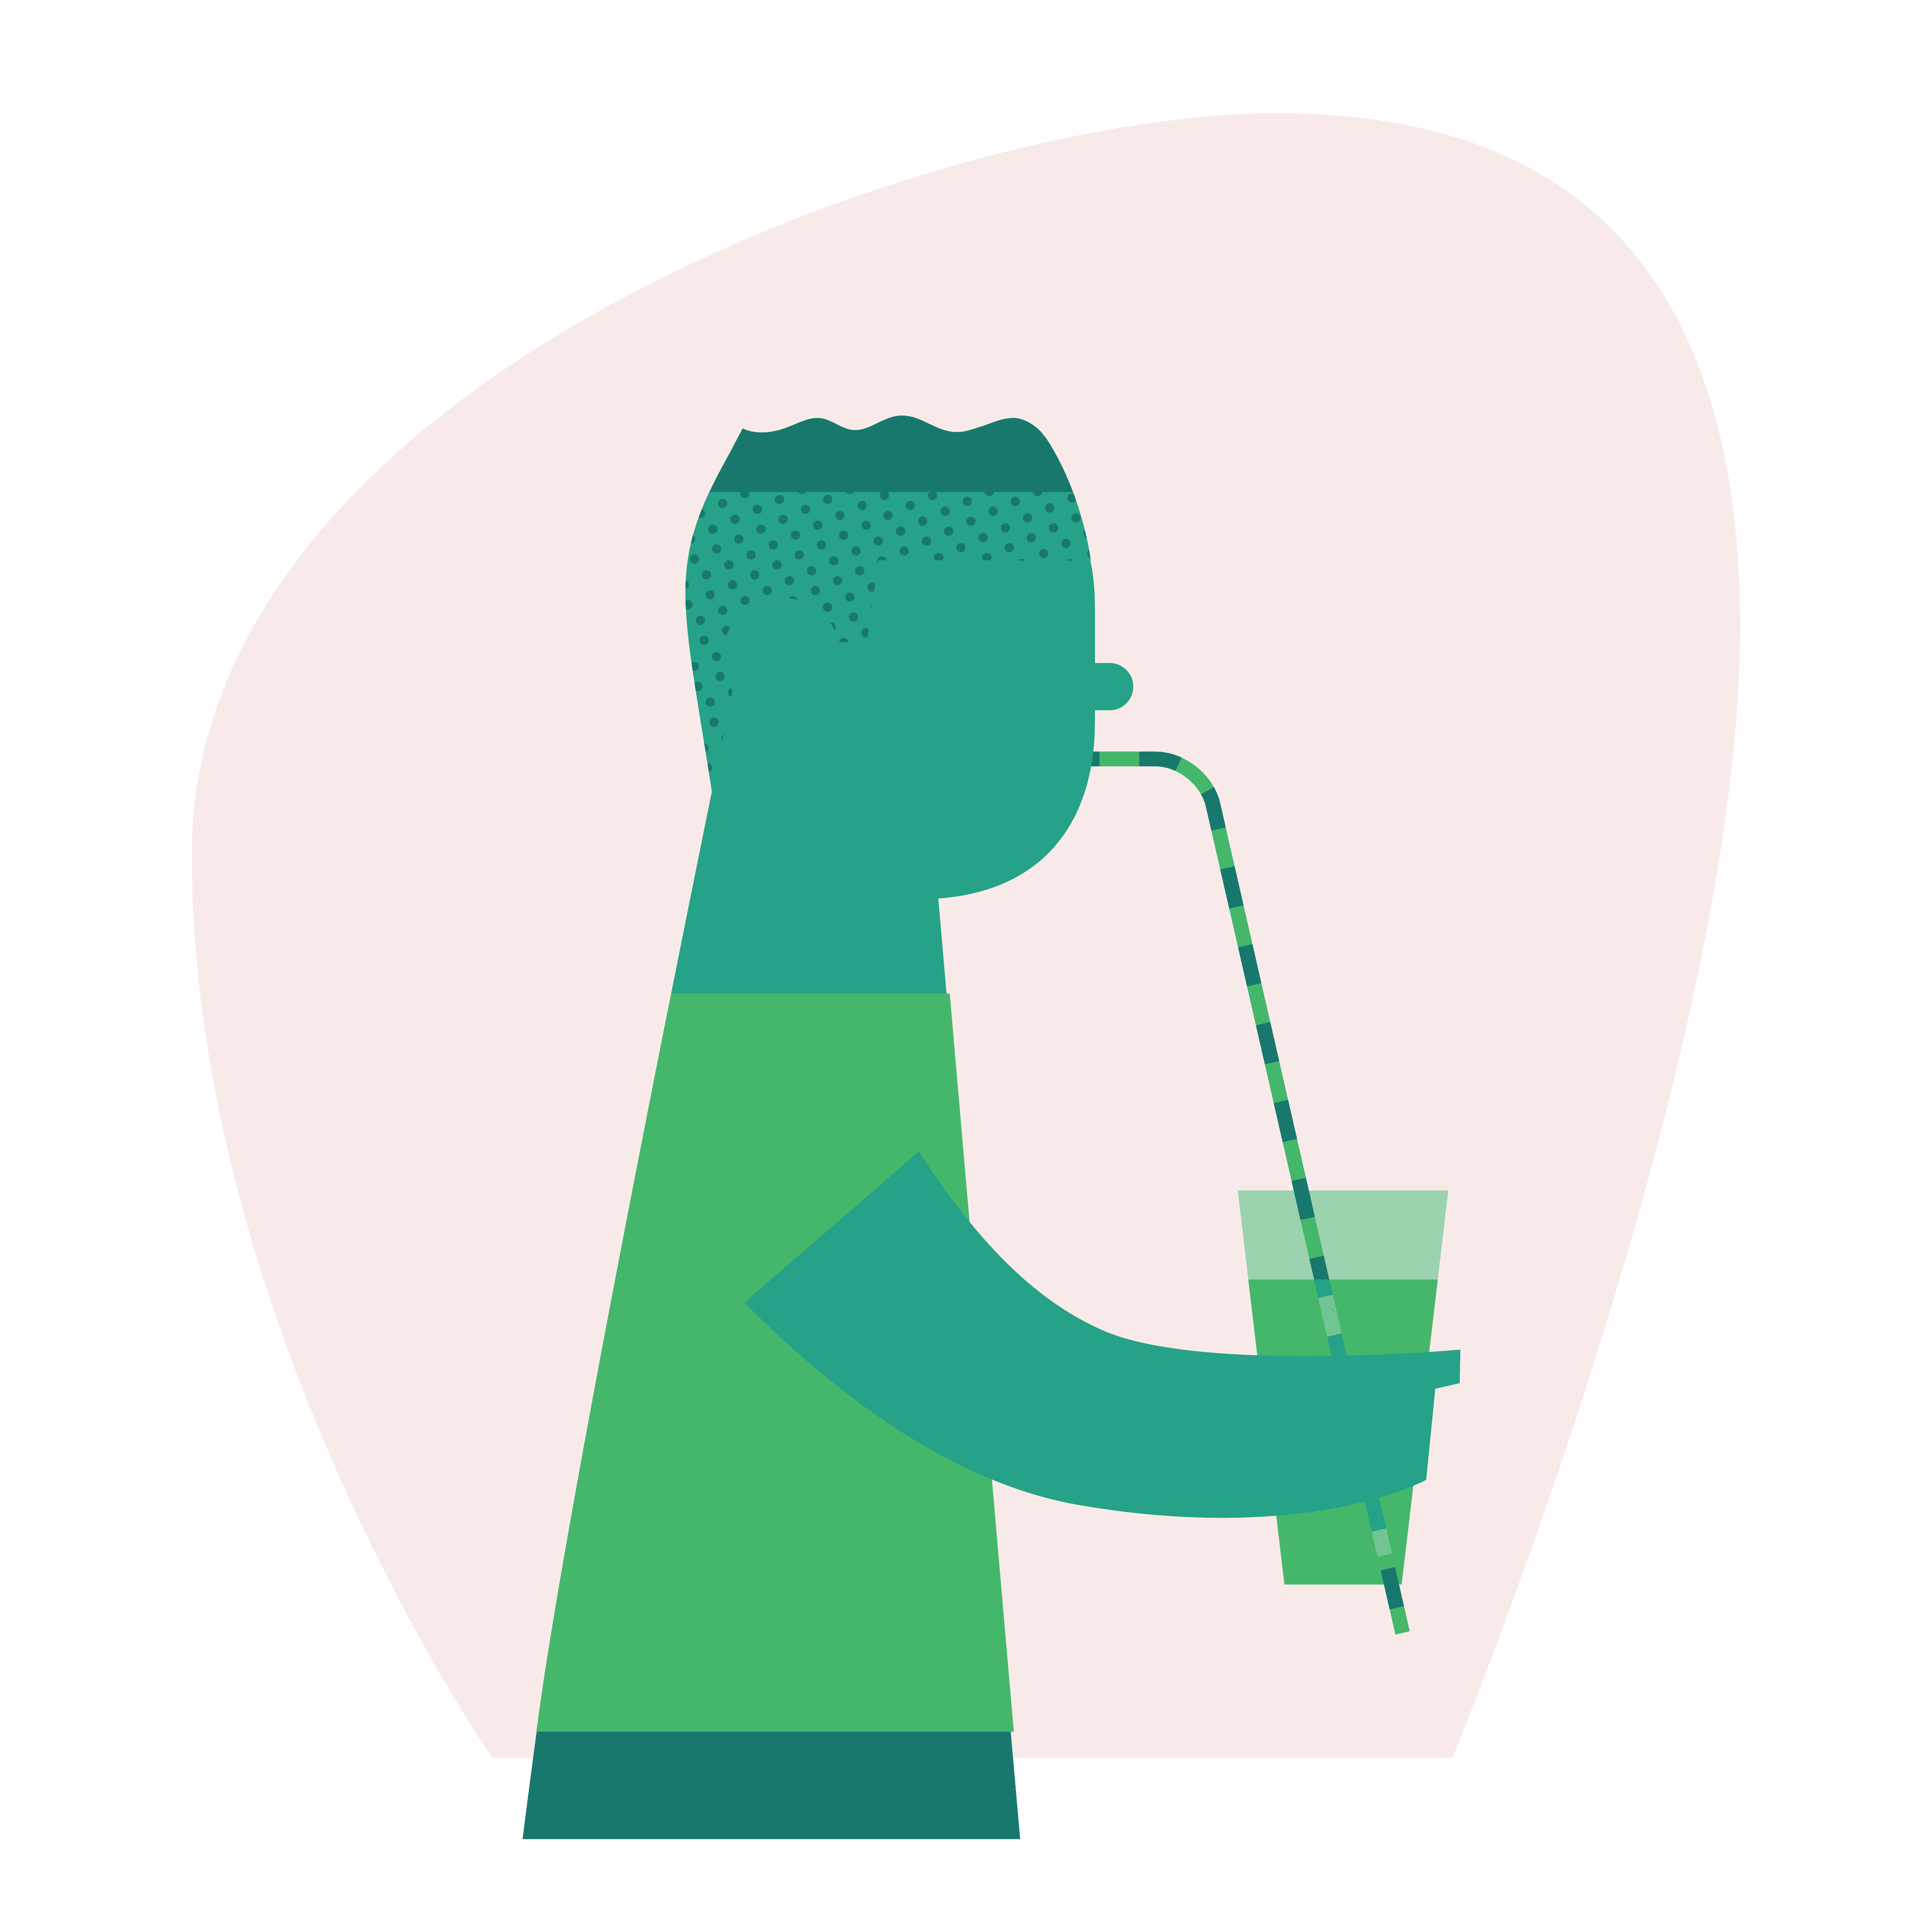 Green boy drinking with a straw